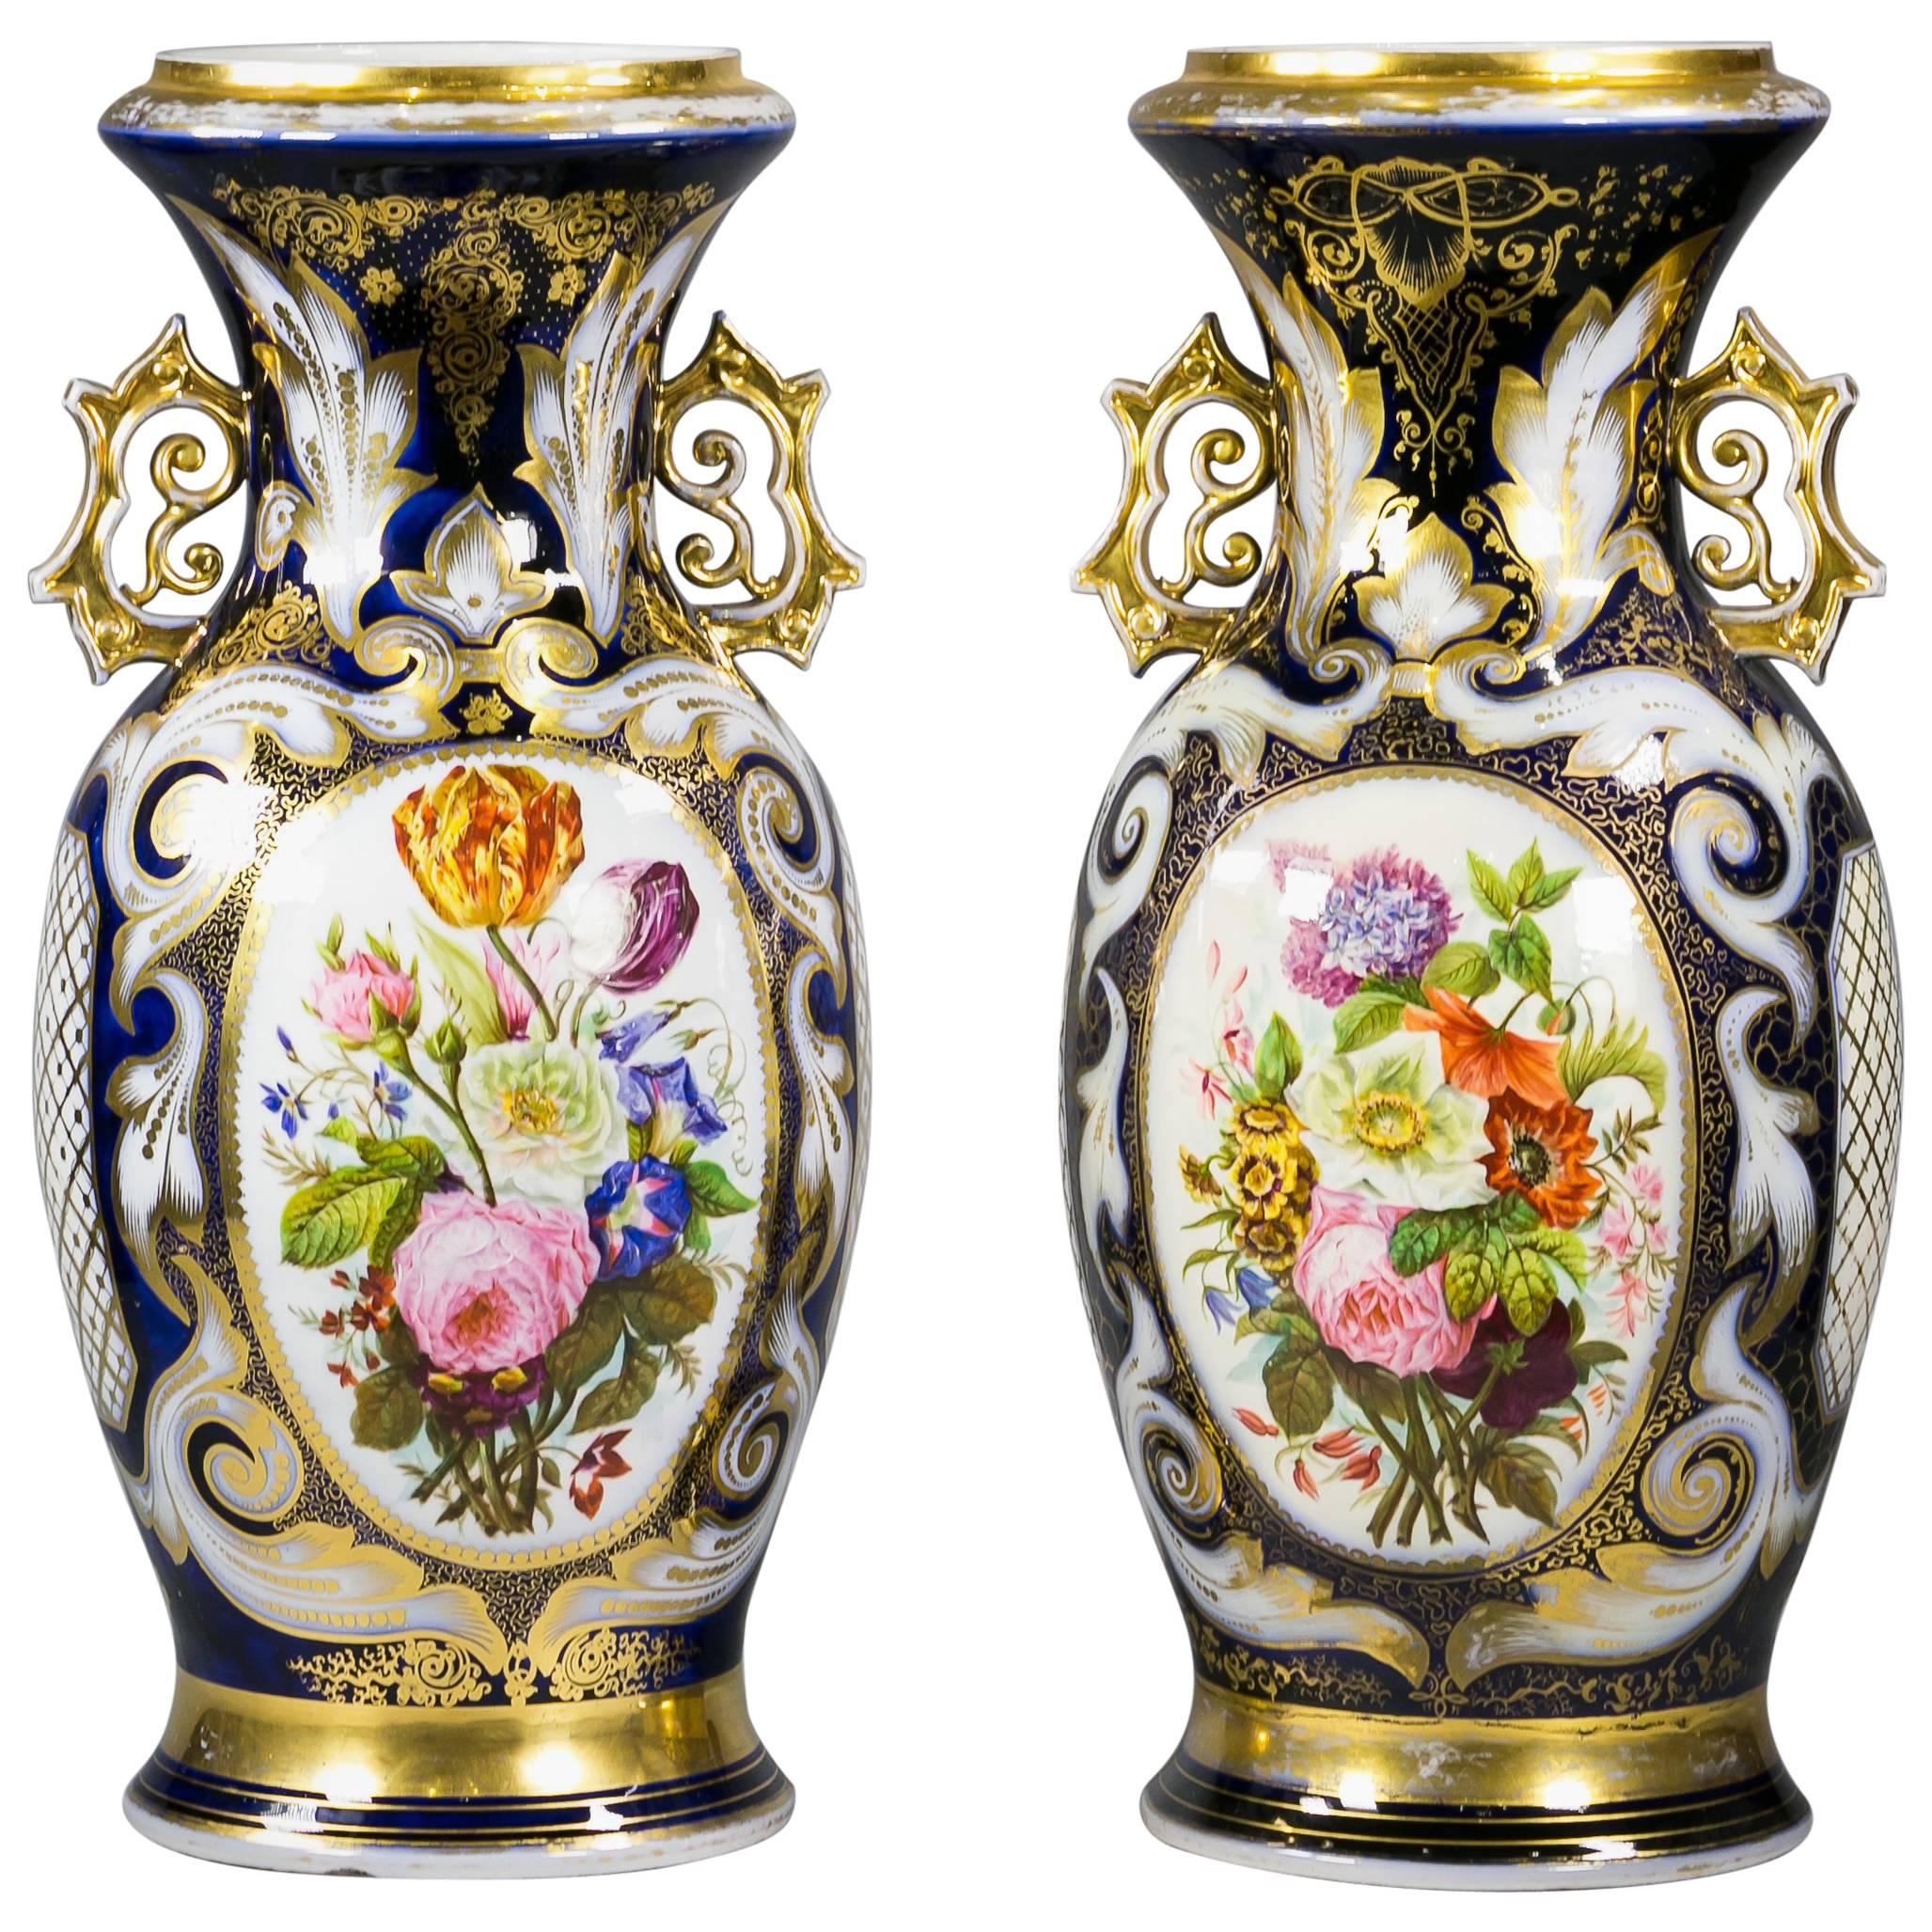 Pair of Paris Porcelain Two Handled Vases, circa 1840